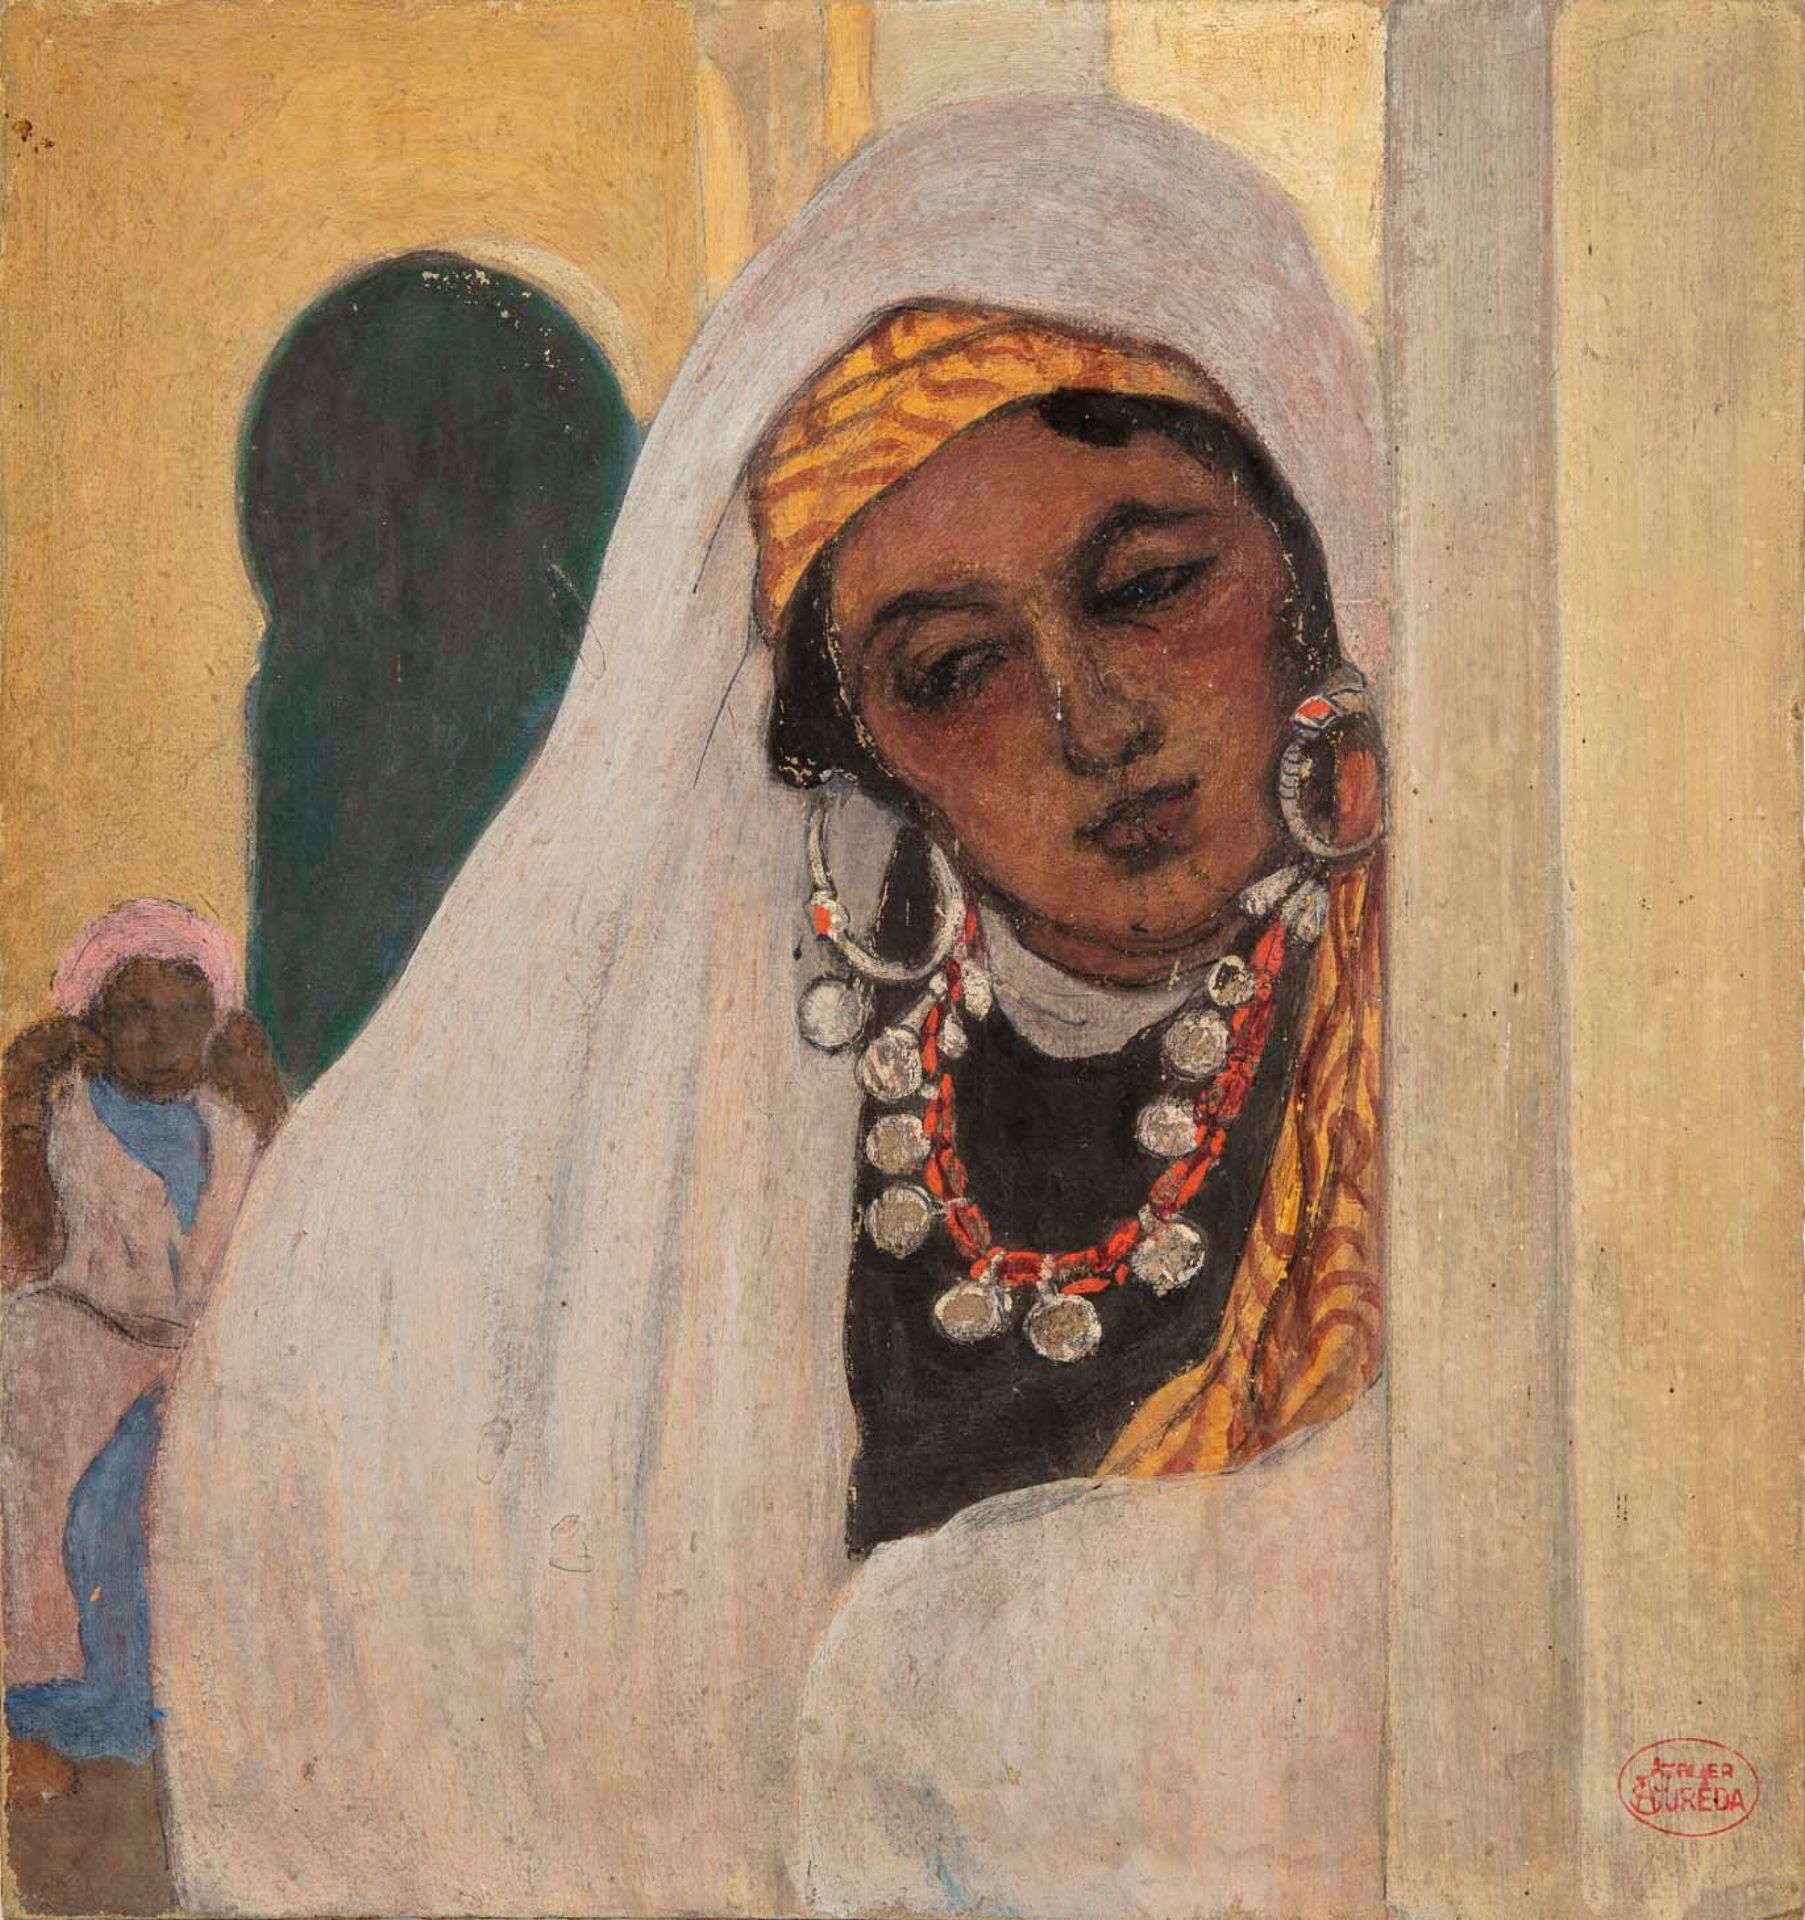 SUREDA 安德烈-苏雷达(1872-1930)

梦幻般的女人与珠宝

水粉画在纸板上，工作室右下方有印章

26 x 24 厘米